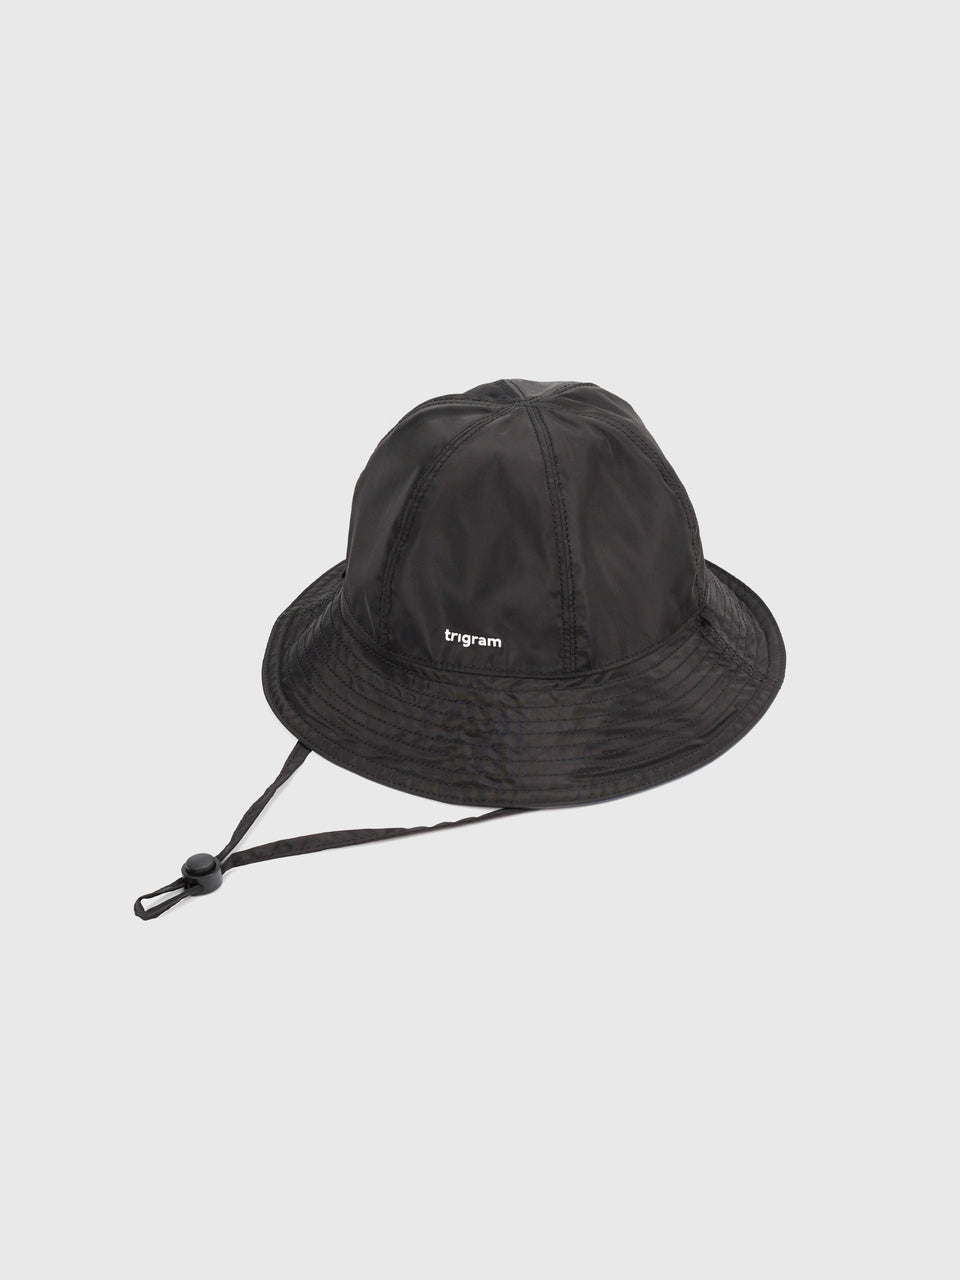 Reversible Bucket Hat - Green Clay / Black